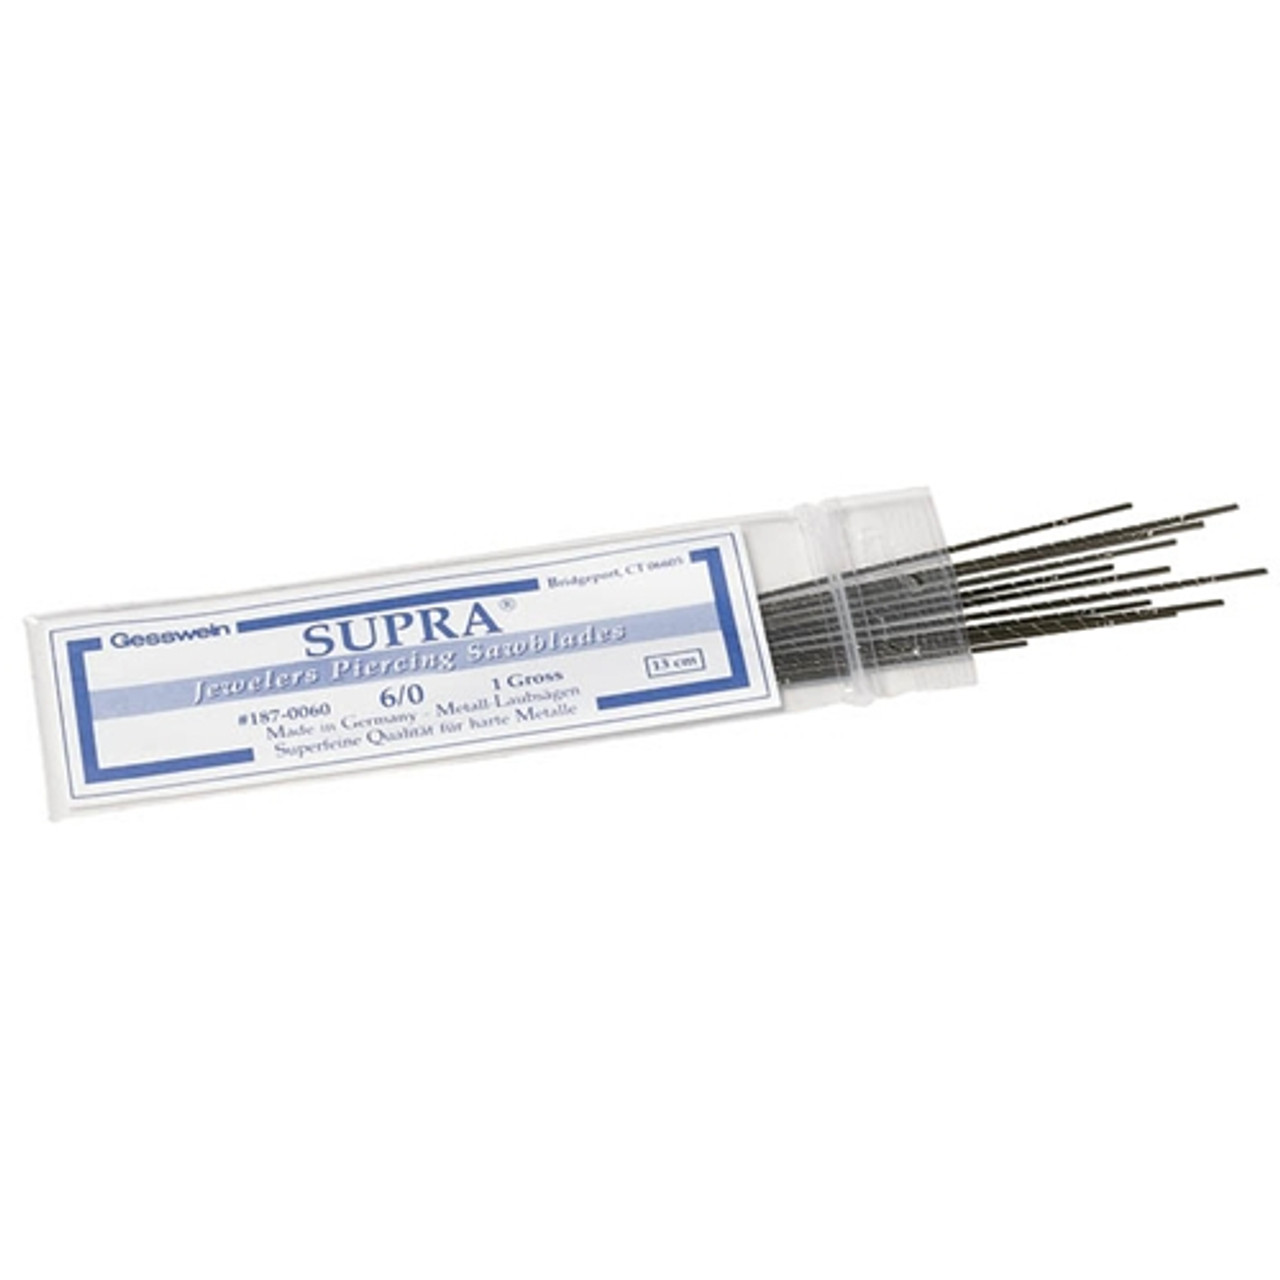 SUPRA® Golden Piercing Saw Blades - #3, 1 Gross